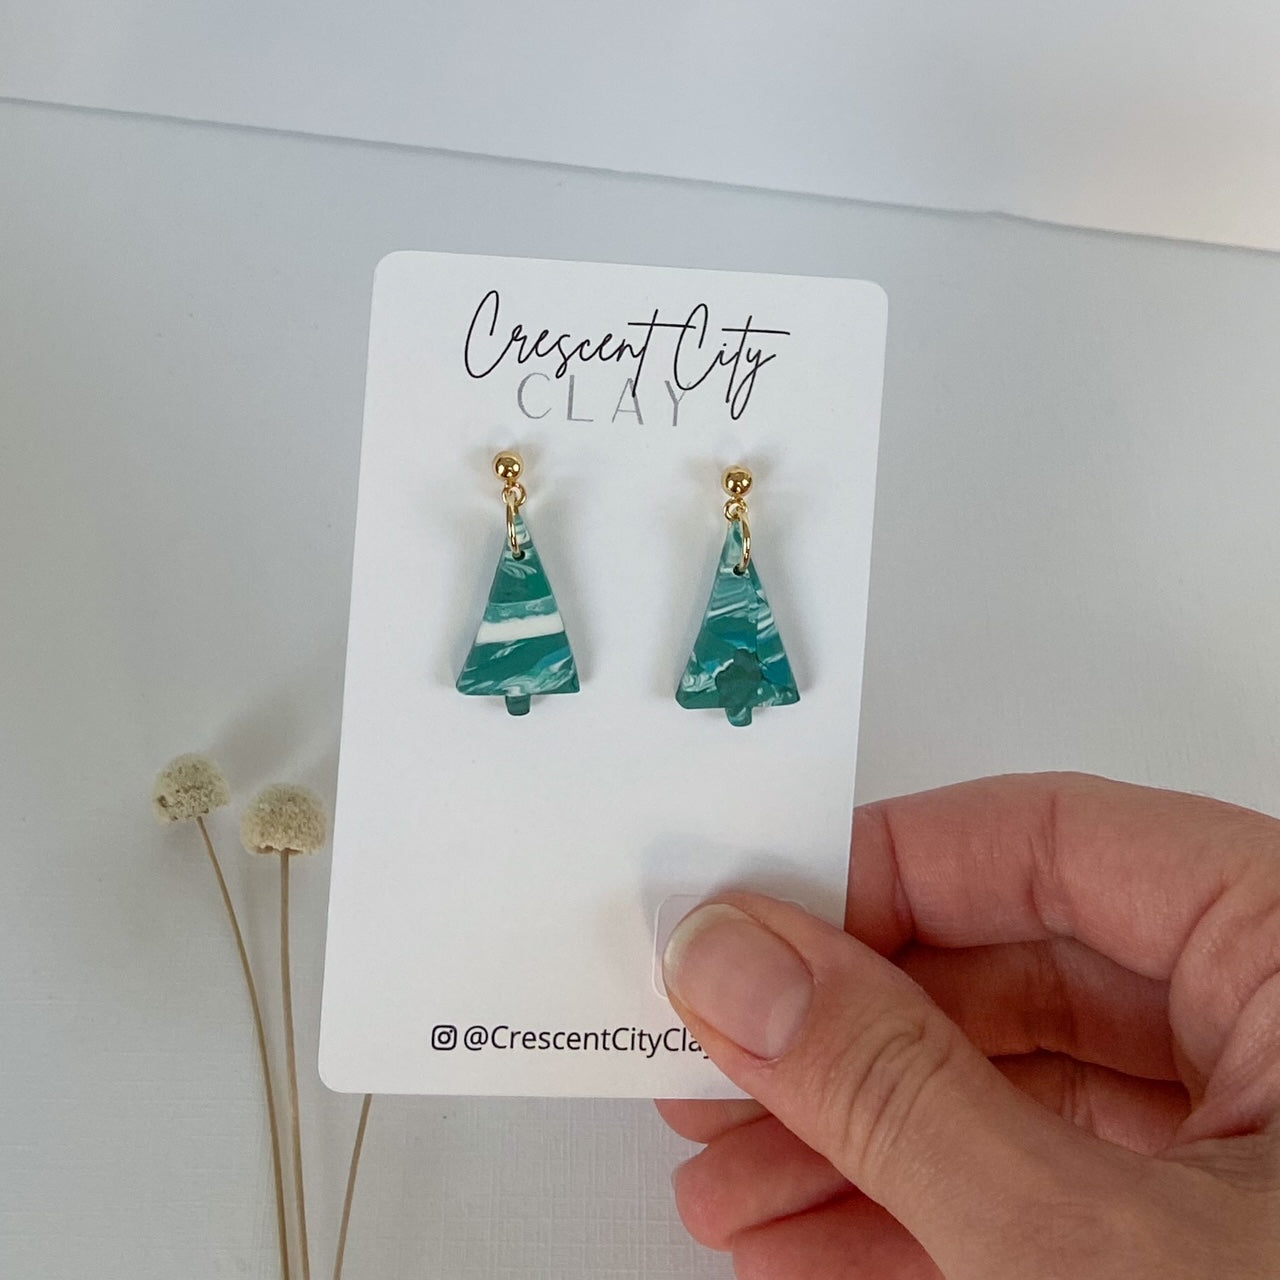 Classic Christmas Tree Dangle Earrings